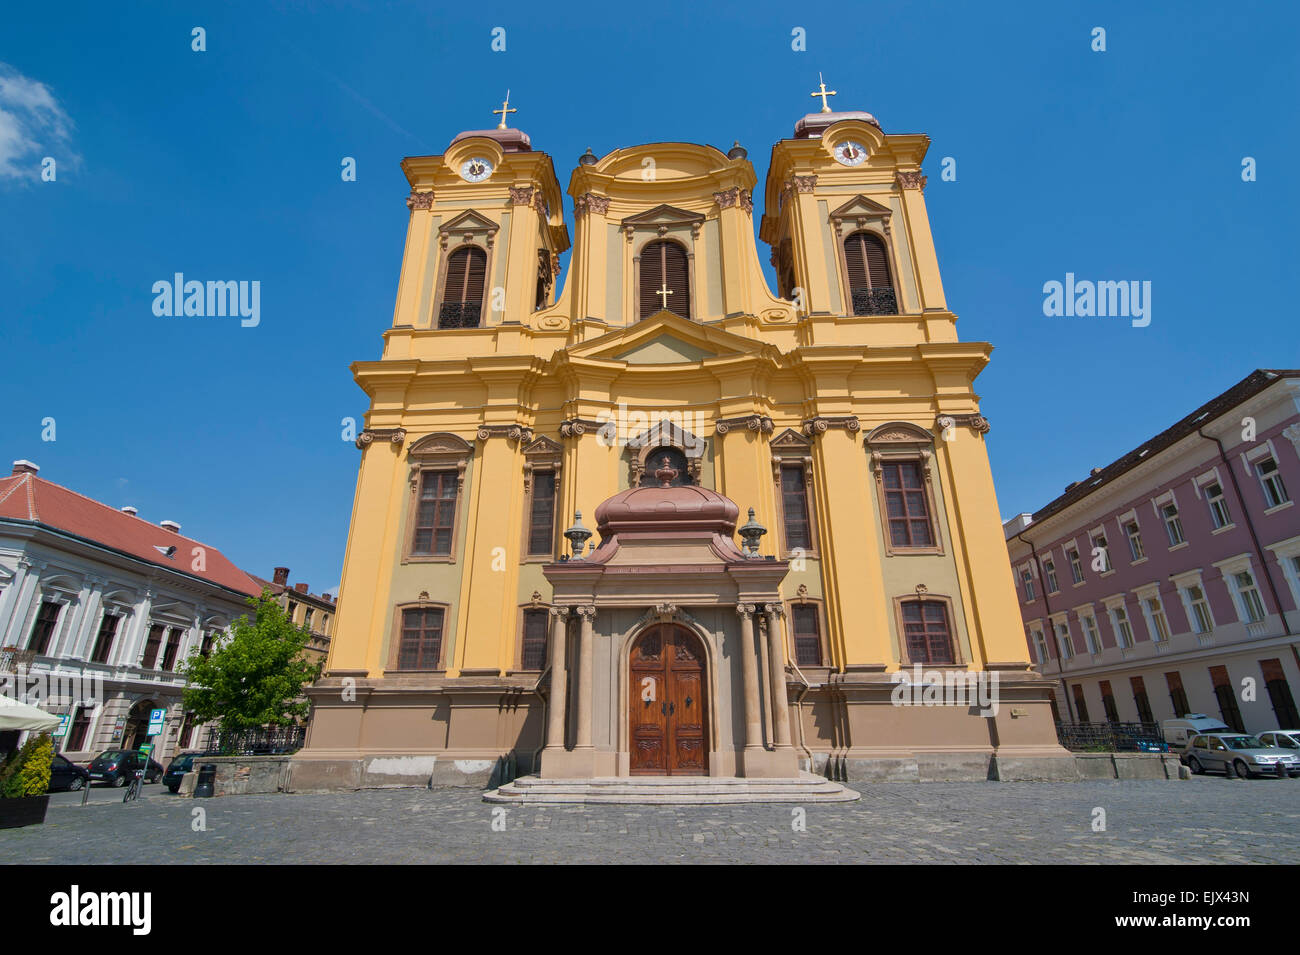 Kathedrale von Saint-George, Unioni Quadrat, Temeswar oder Timisoara, Rumänien Stockfoto